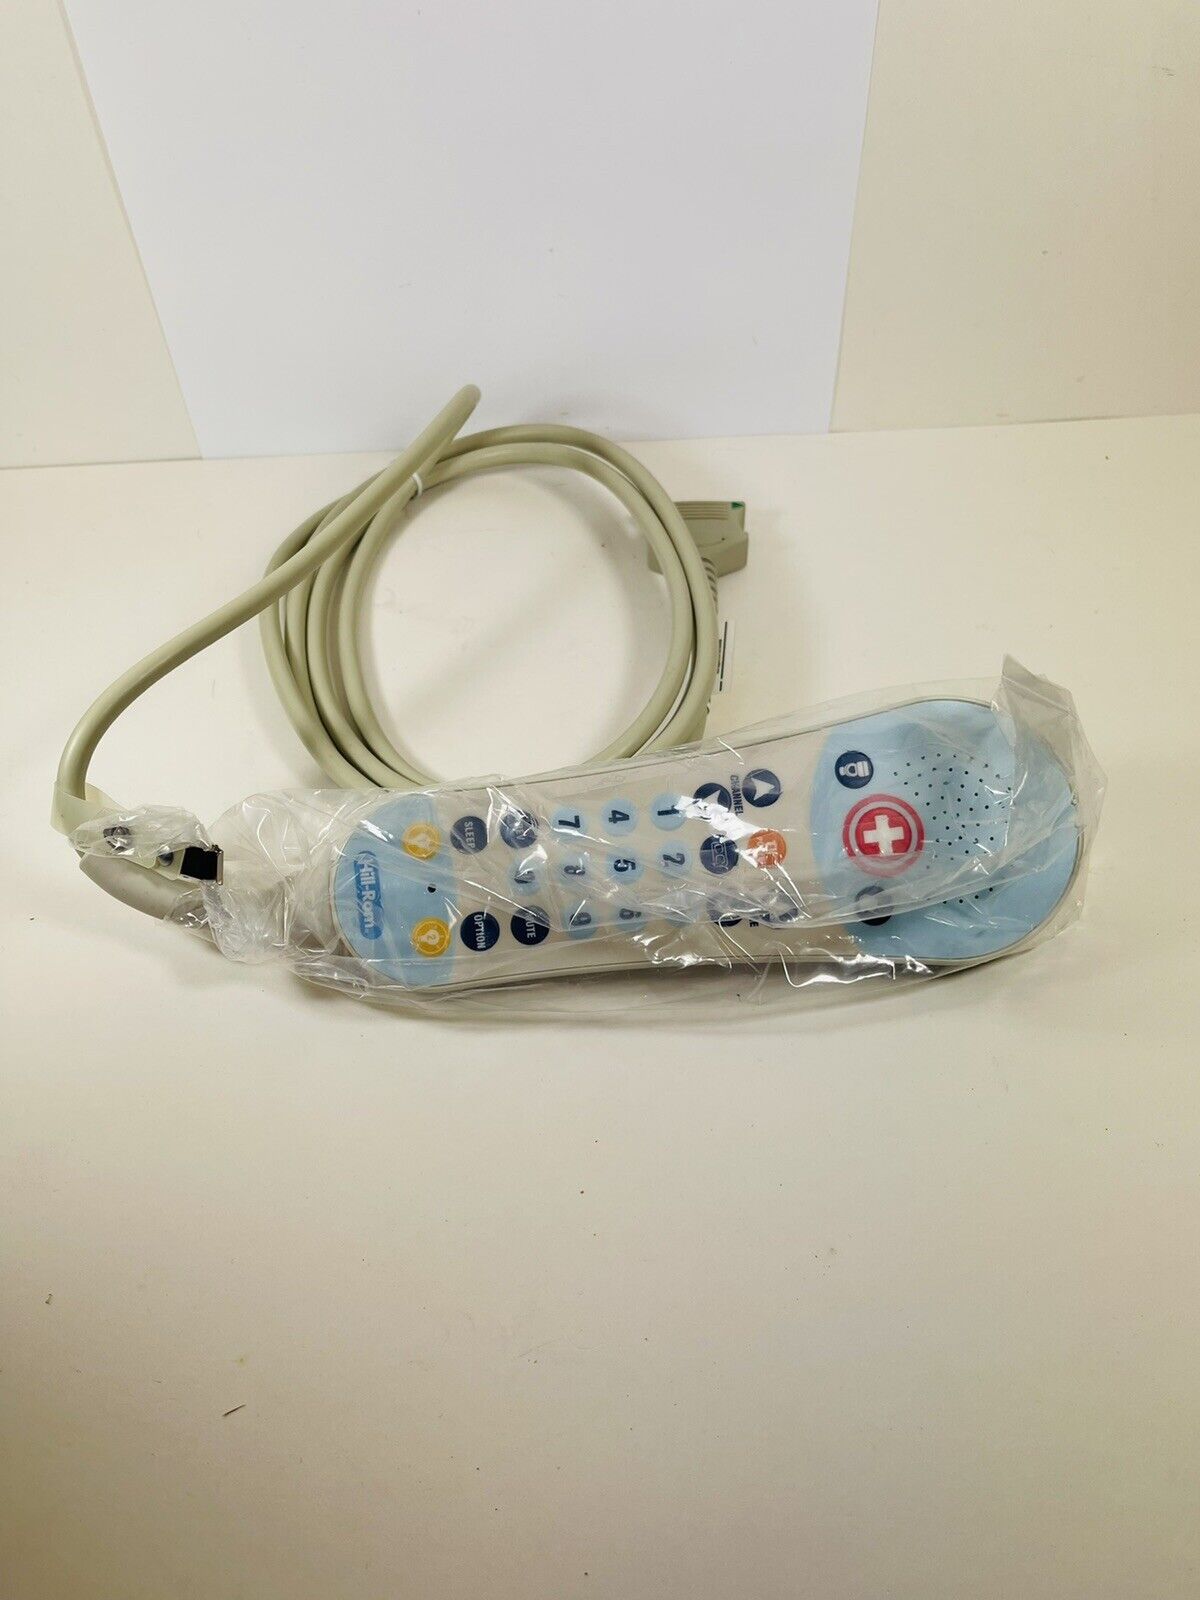 Hill-Rom P25104C331U-Z105018 Nurse call Hand Held Remote Pillow